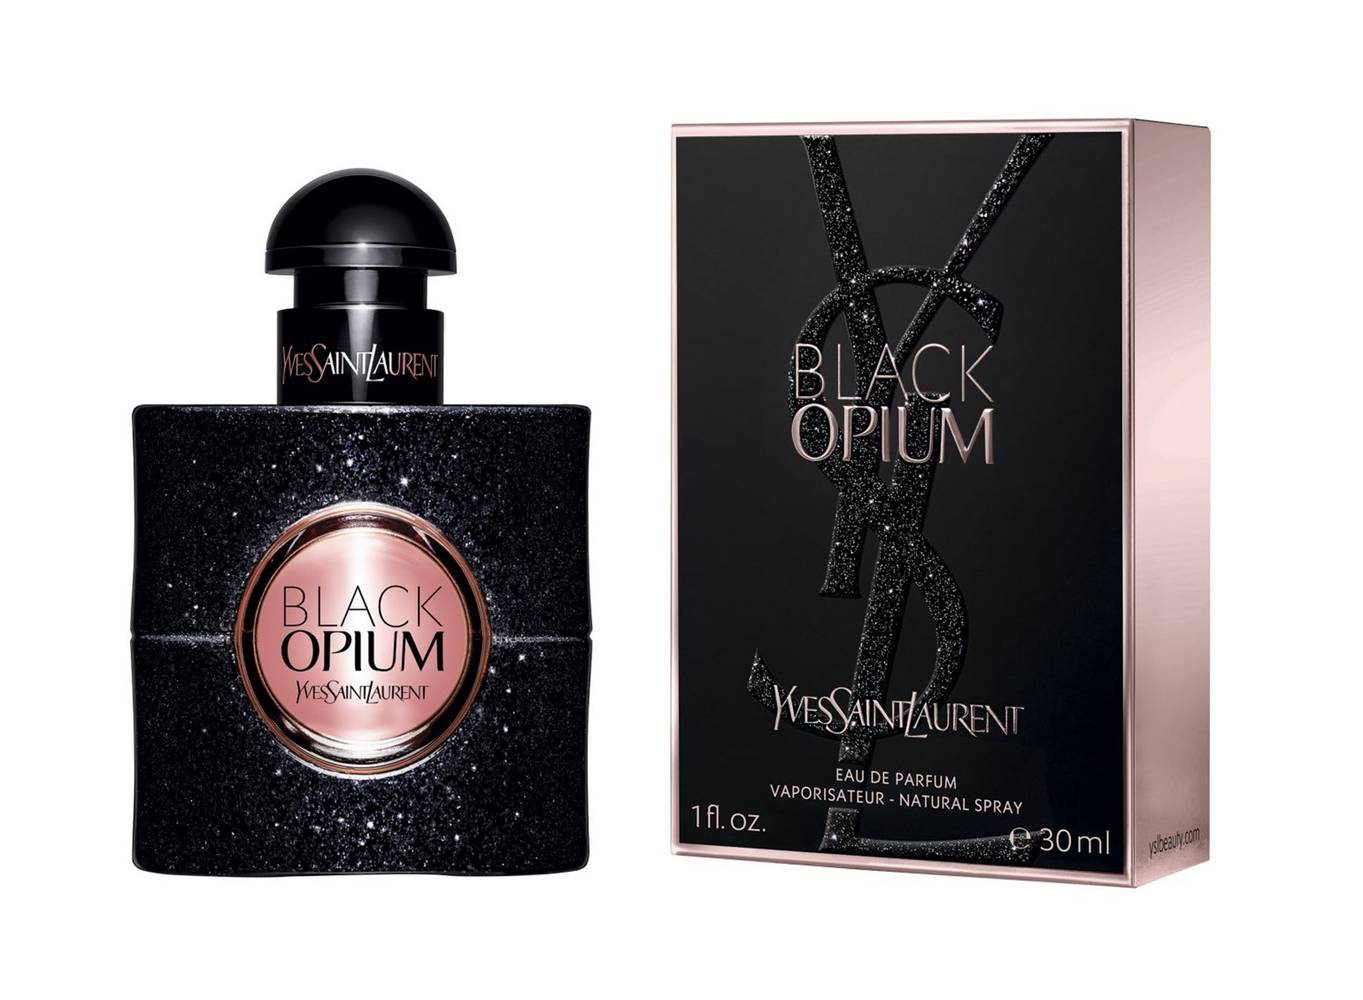 Yves saint laurent perfume opium black (30 ml)